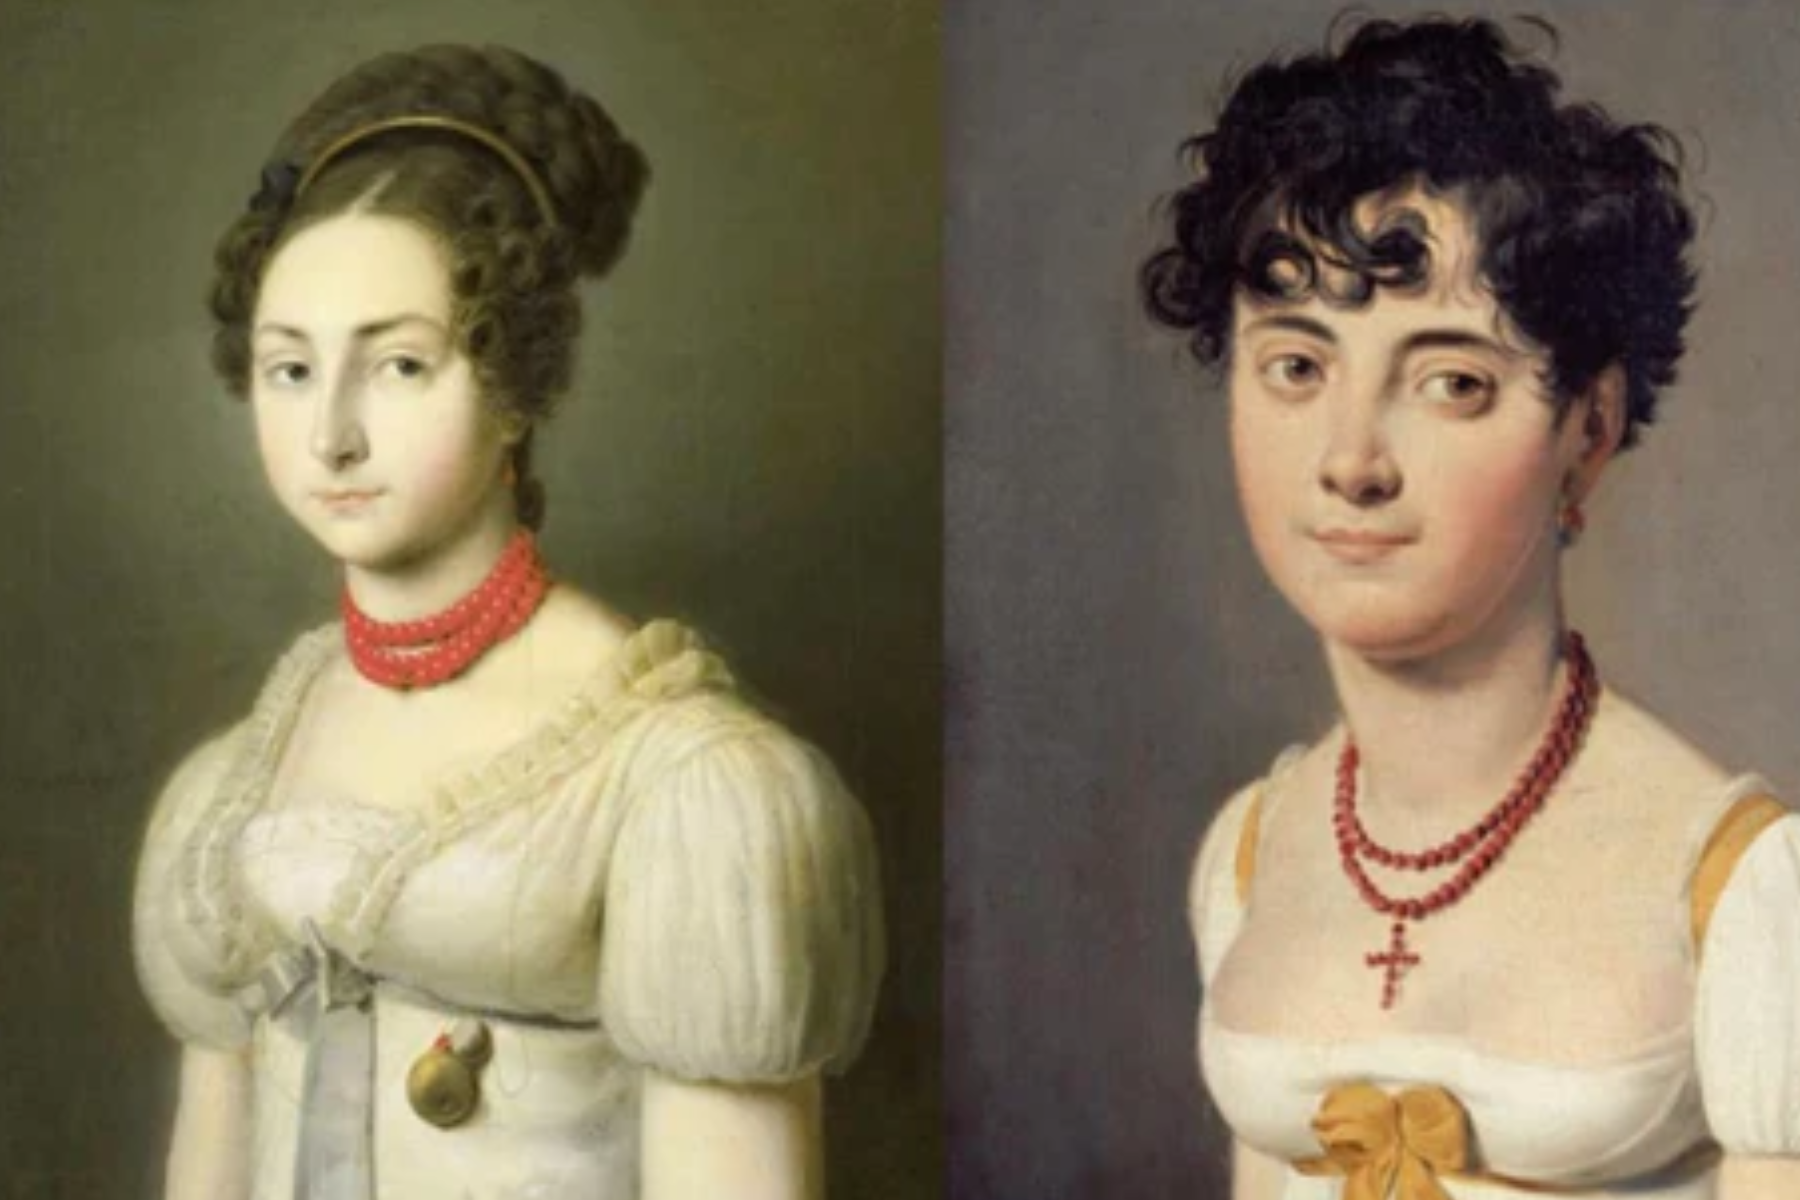 Two ancient-era portraits of women wearing chokers